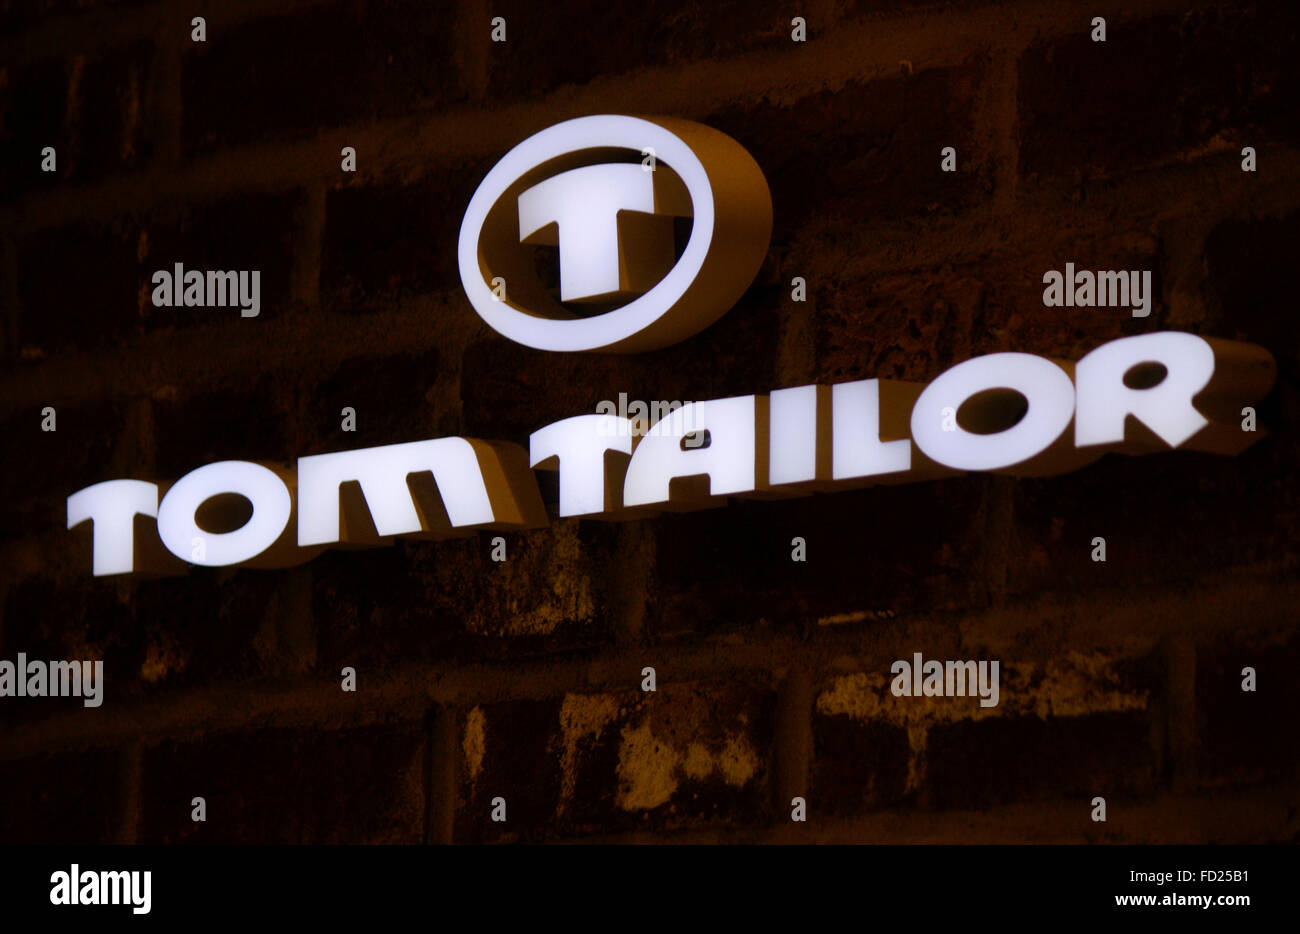 Tom tailor -Fotos und -Bildmaterial in hoher Auflösung – Alamy